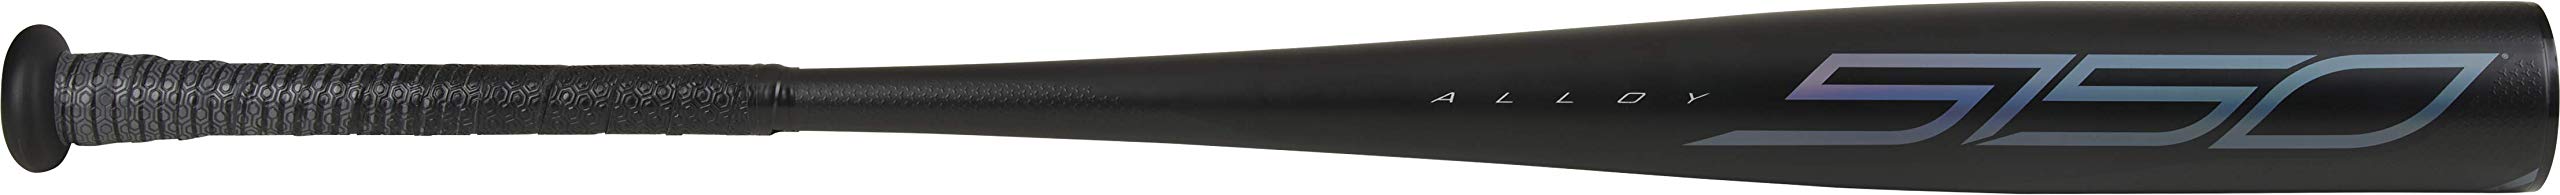 Rawlings Herren BB153-34 Baseballschläger, Schwarz/Metallic-Silber, 34 inch